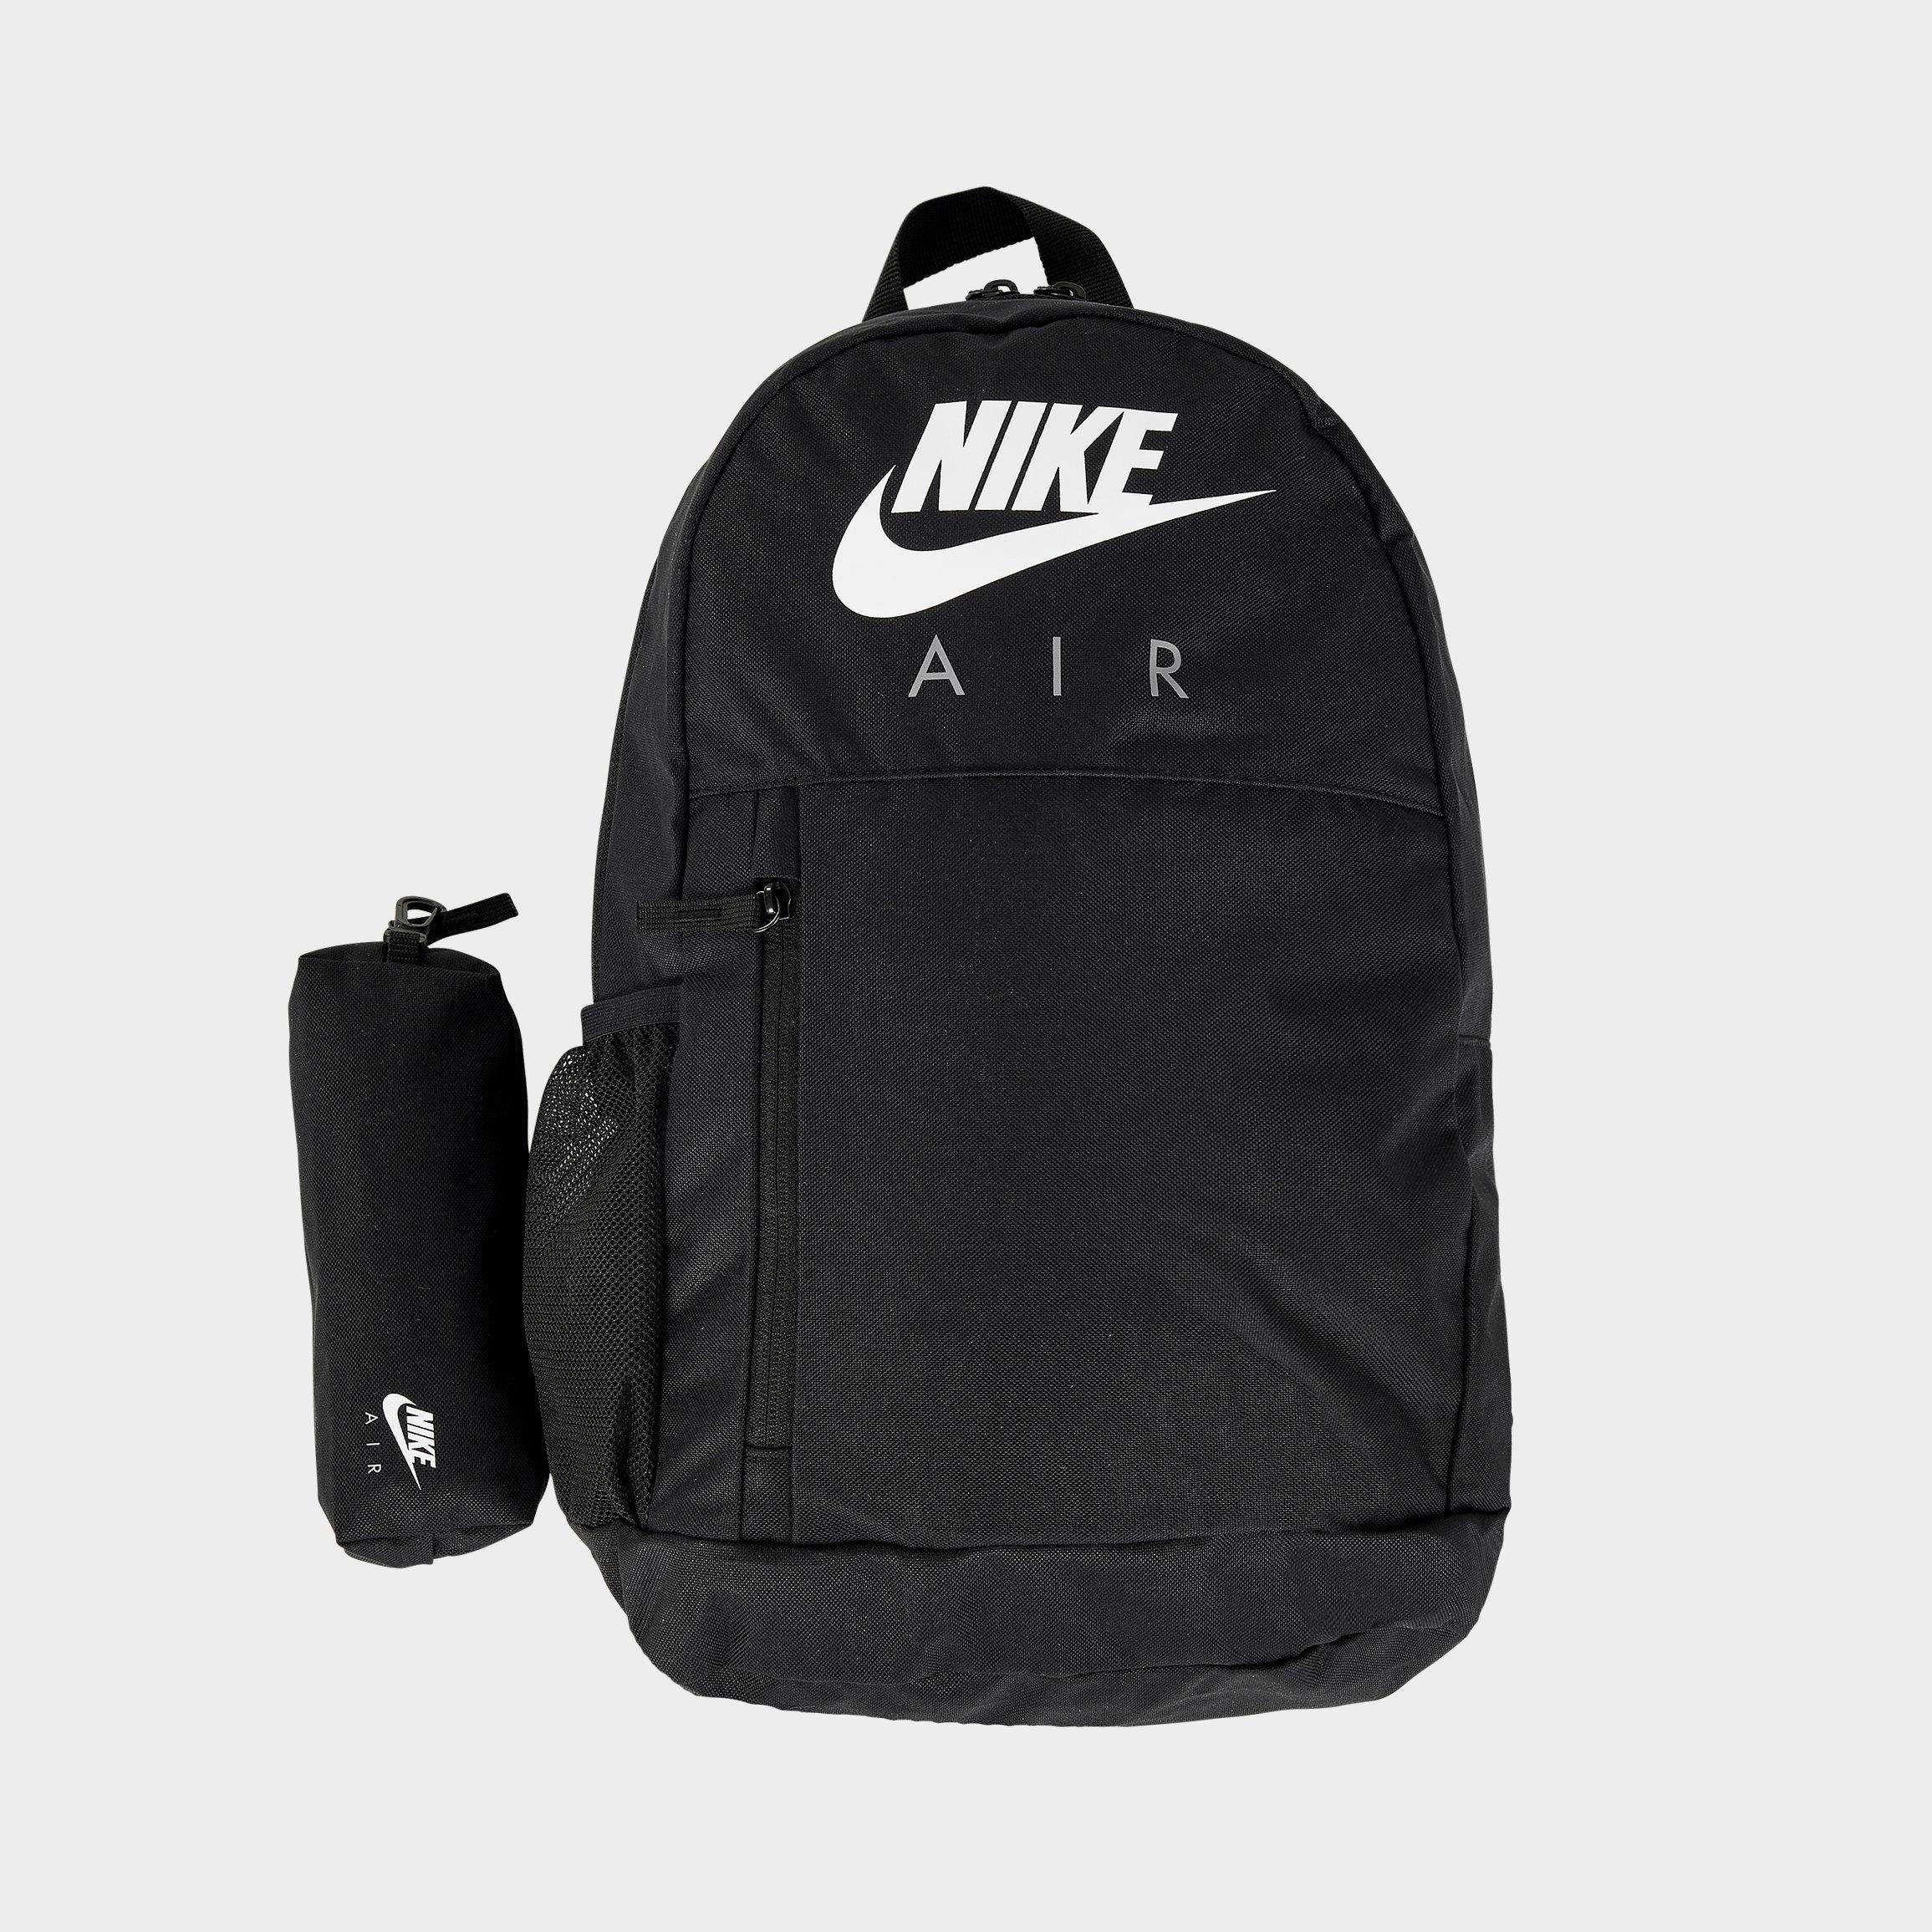 jd sports adidas backpack